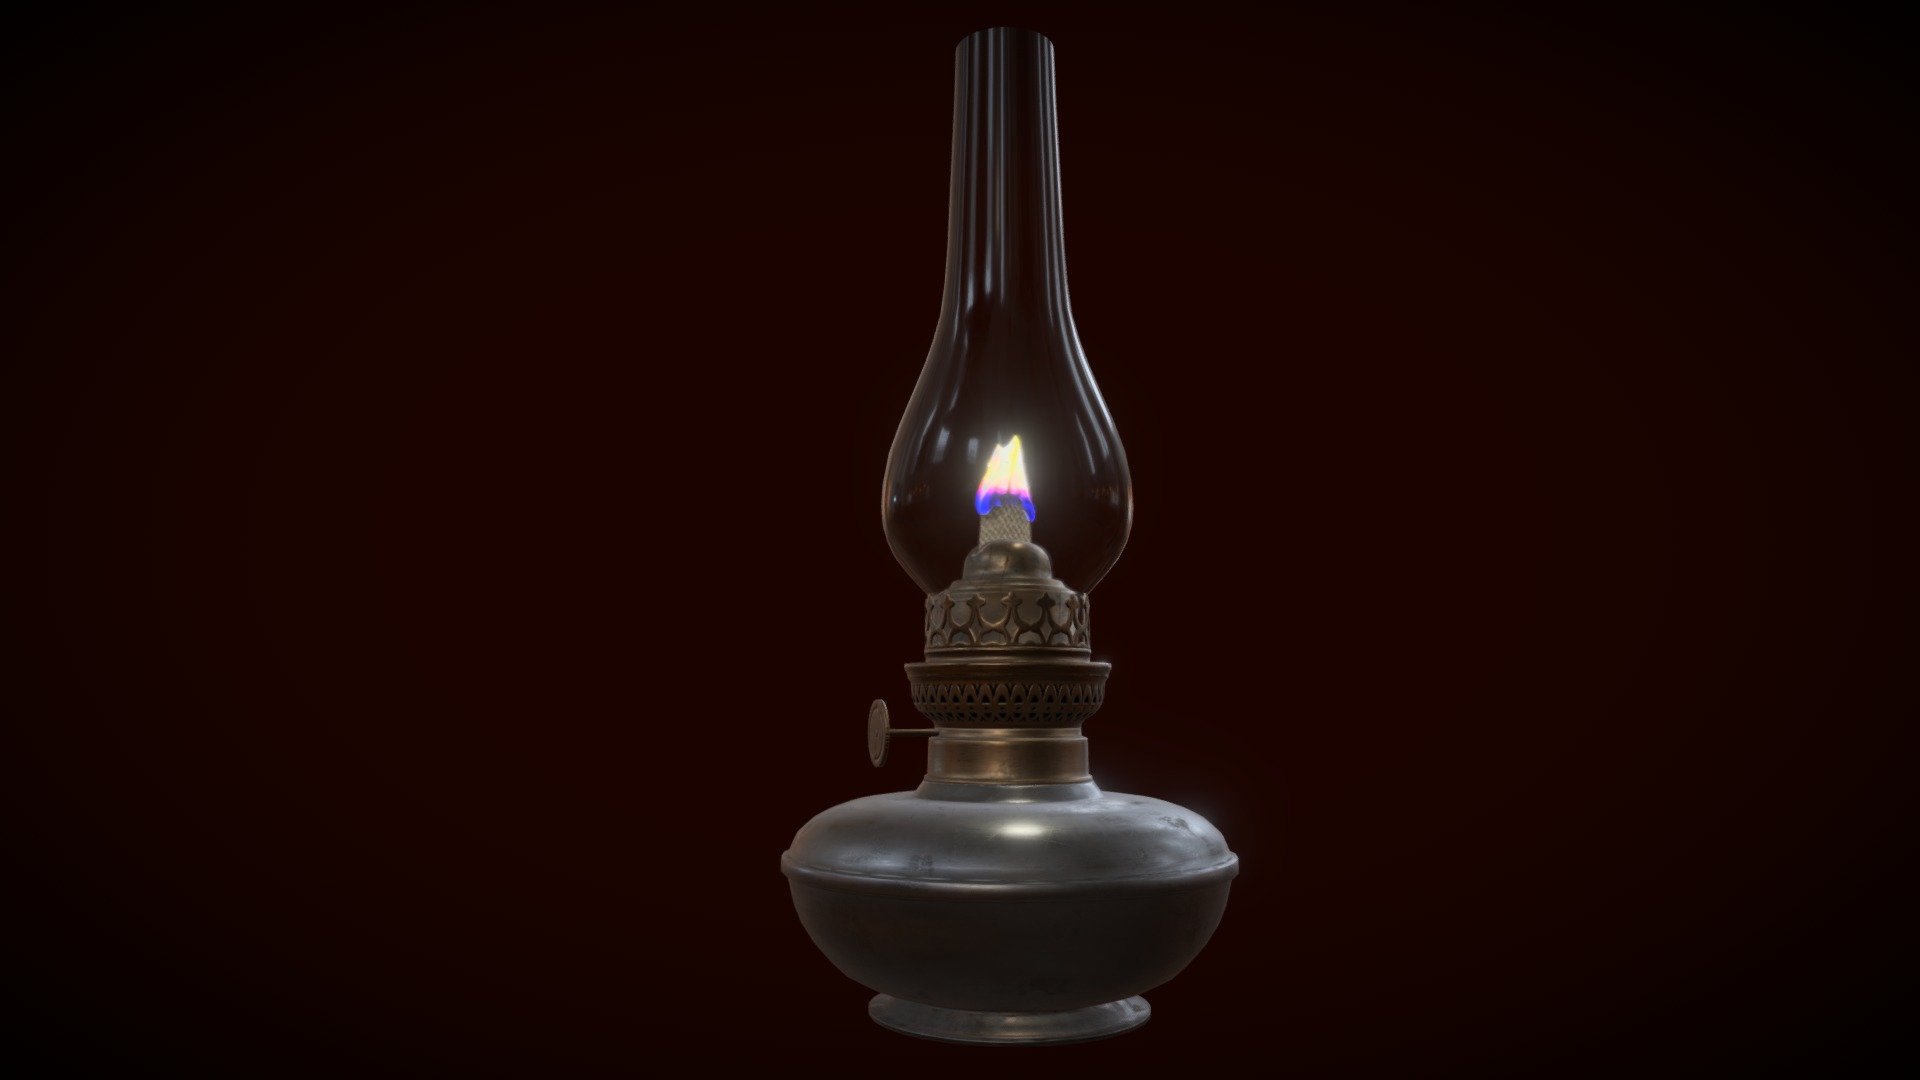 A victorian era kerosene lamp from my victorian still life.
Created with Blender, Substance Designer, Substance Painter and 3D Coat 3d model